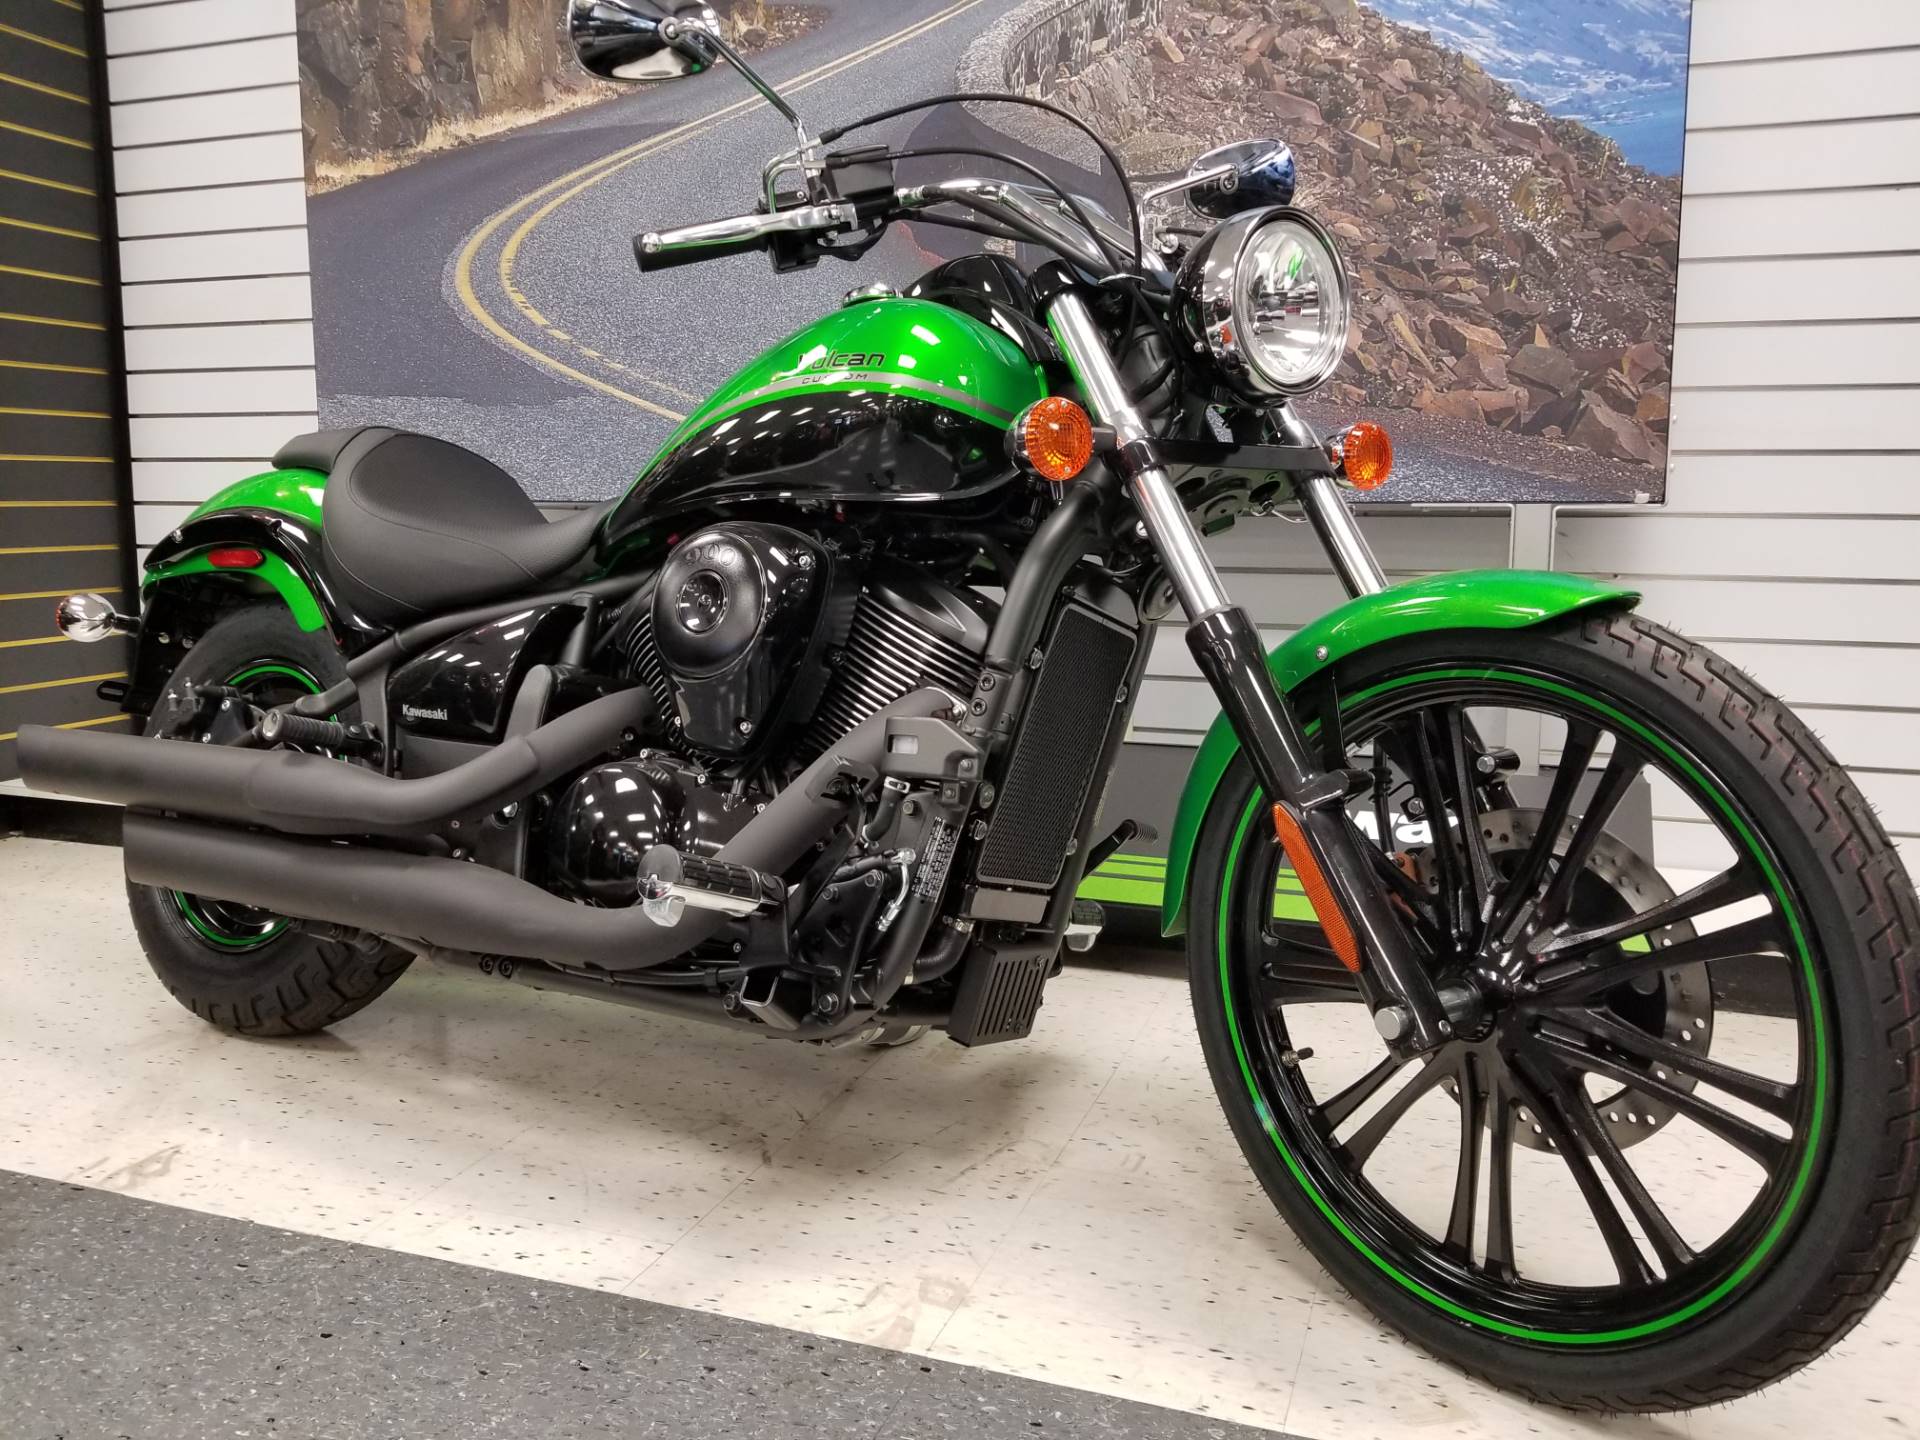 New 2018 Kawasaki Vulcan 900 Custom Motorcycles in Greenville, SC